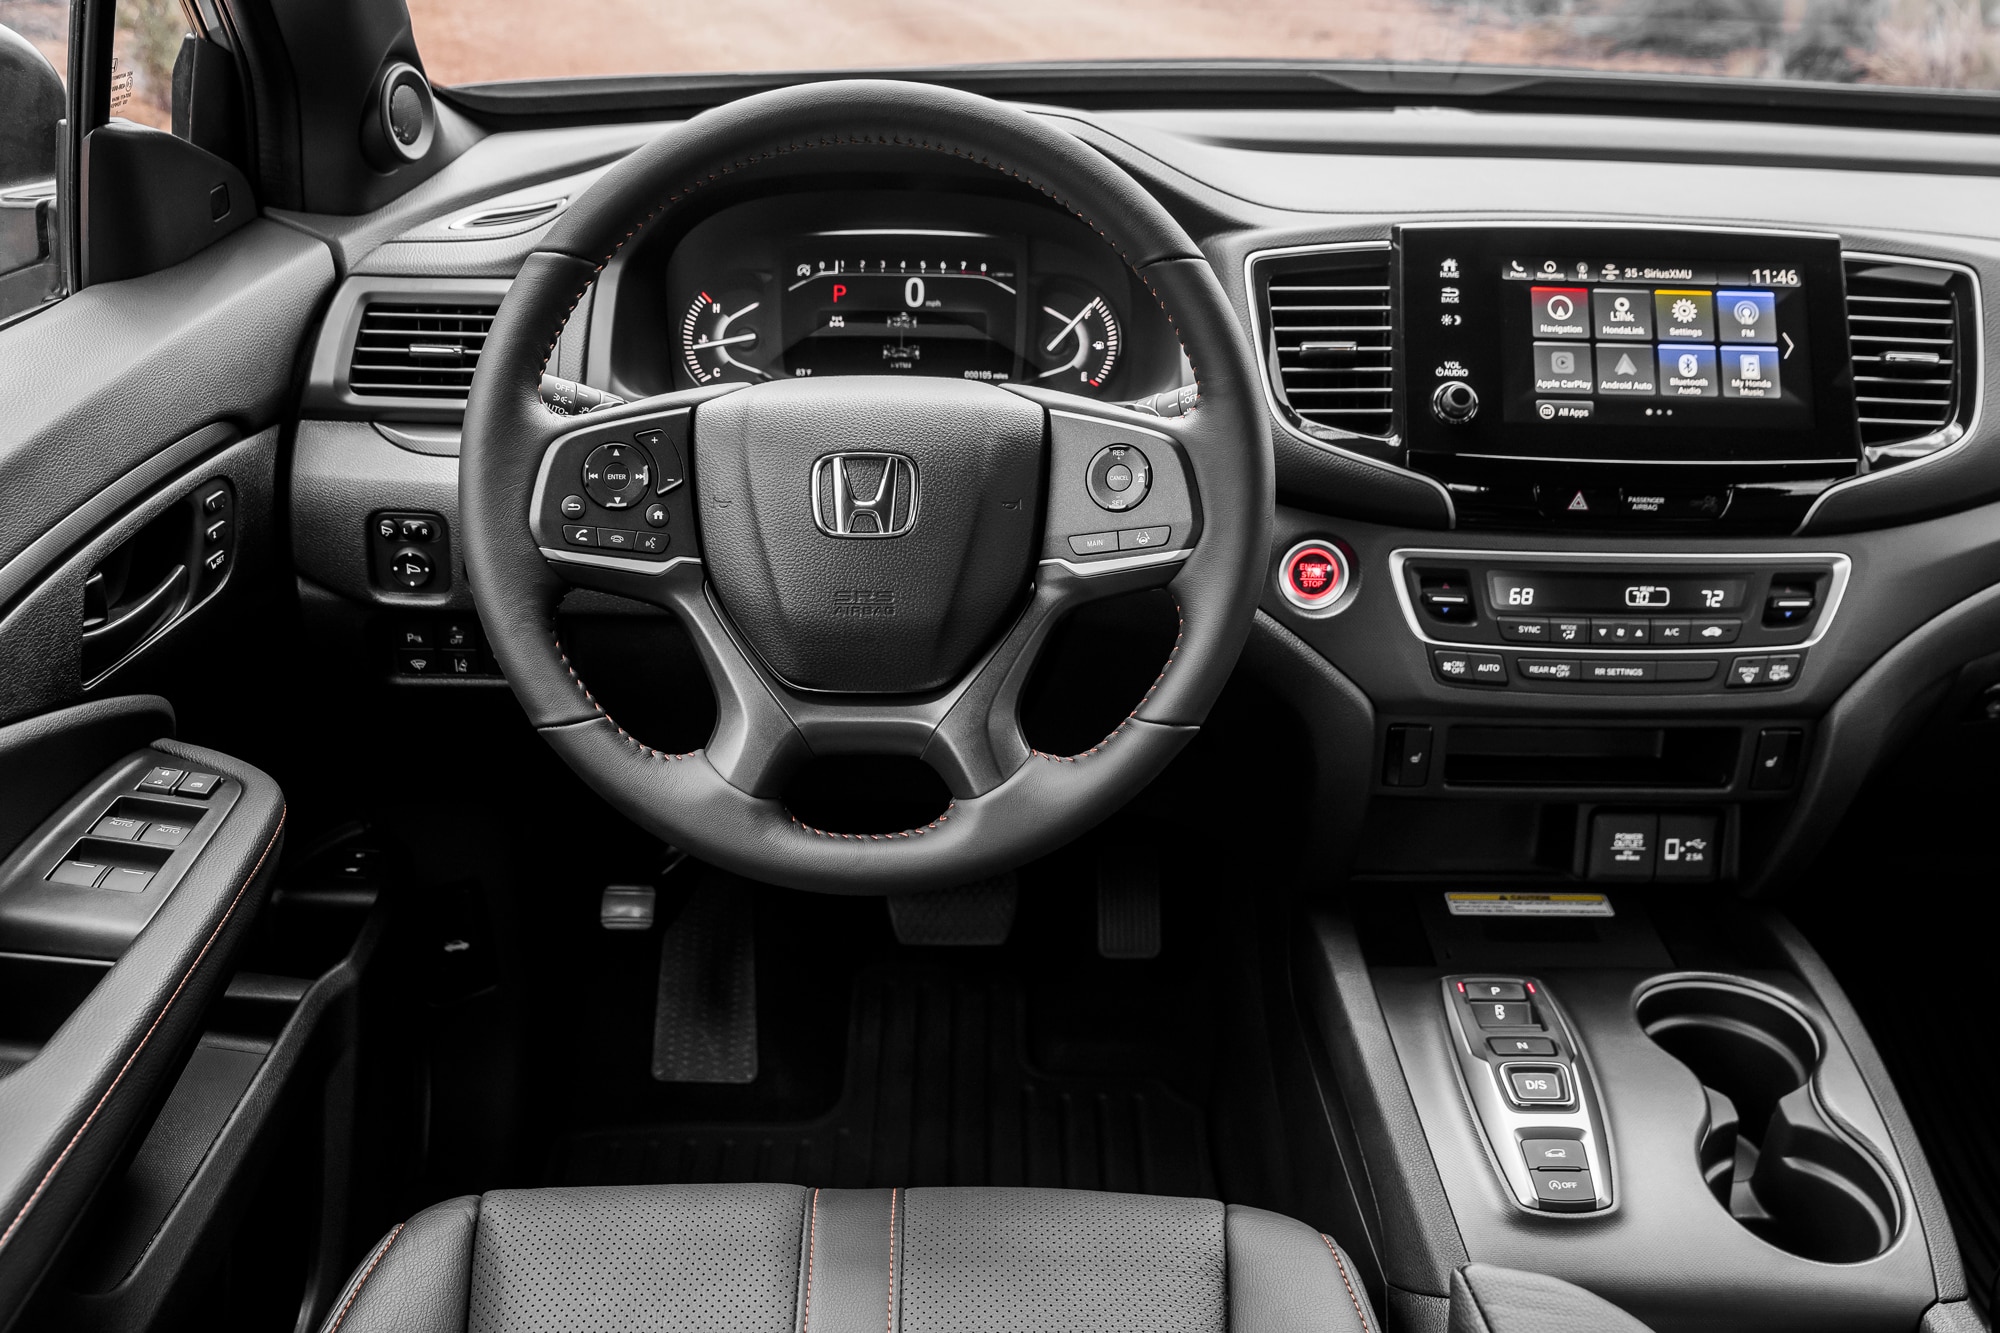 Honda Passport steering and front display